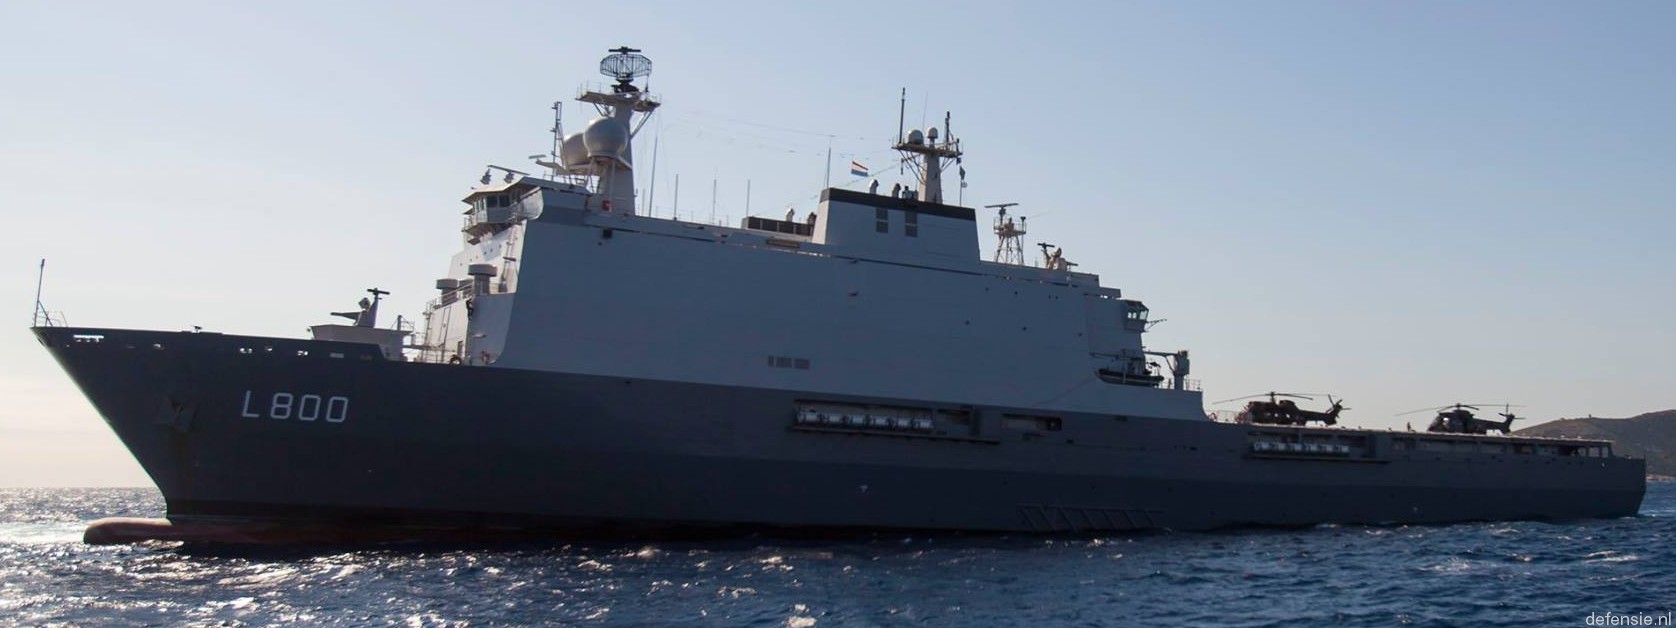 l-800 hnlms rotterdam amphibious landing ship dock lpd royal netherlands navy 20